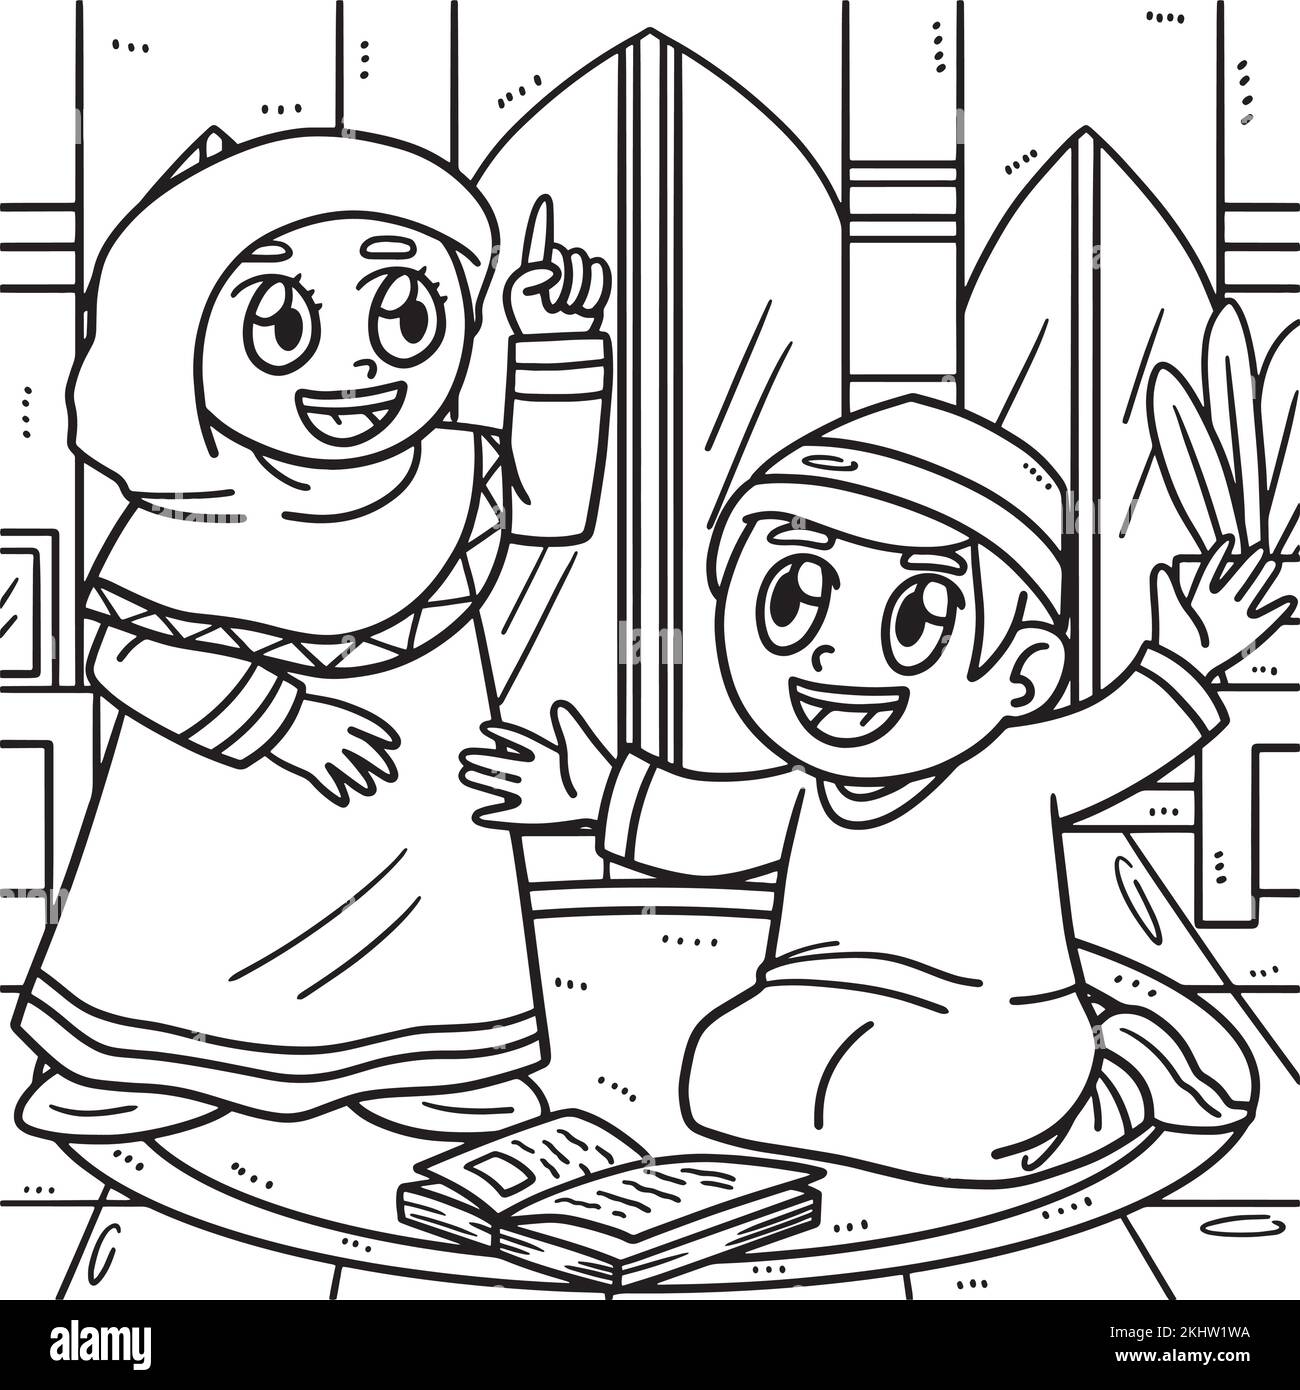 Ramadan Muslim Children Coloring Page for Kids Stock Vector